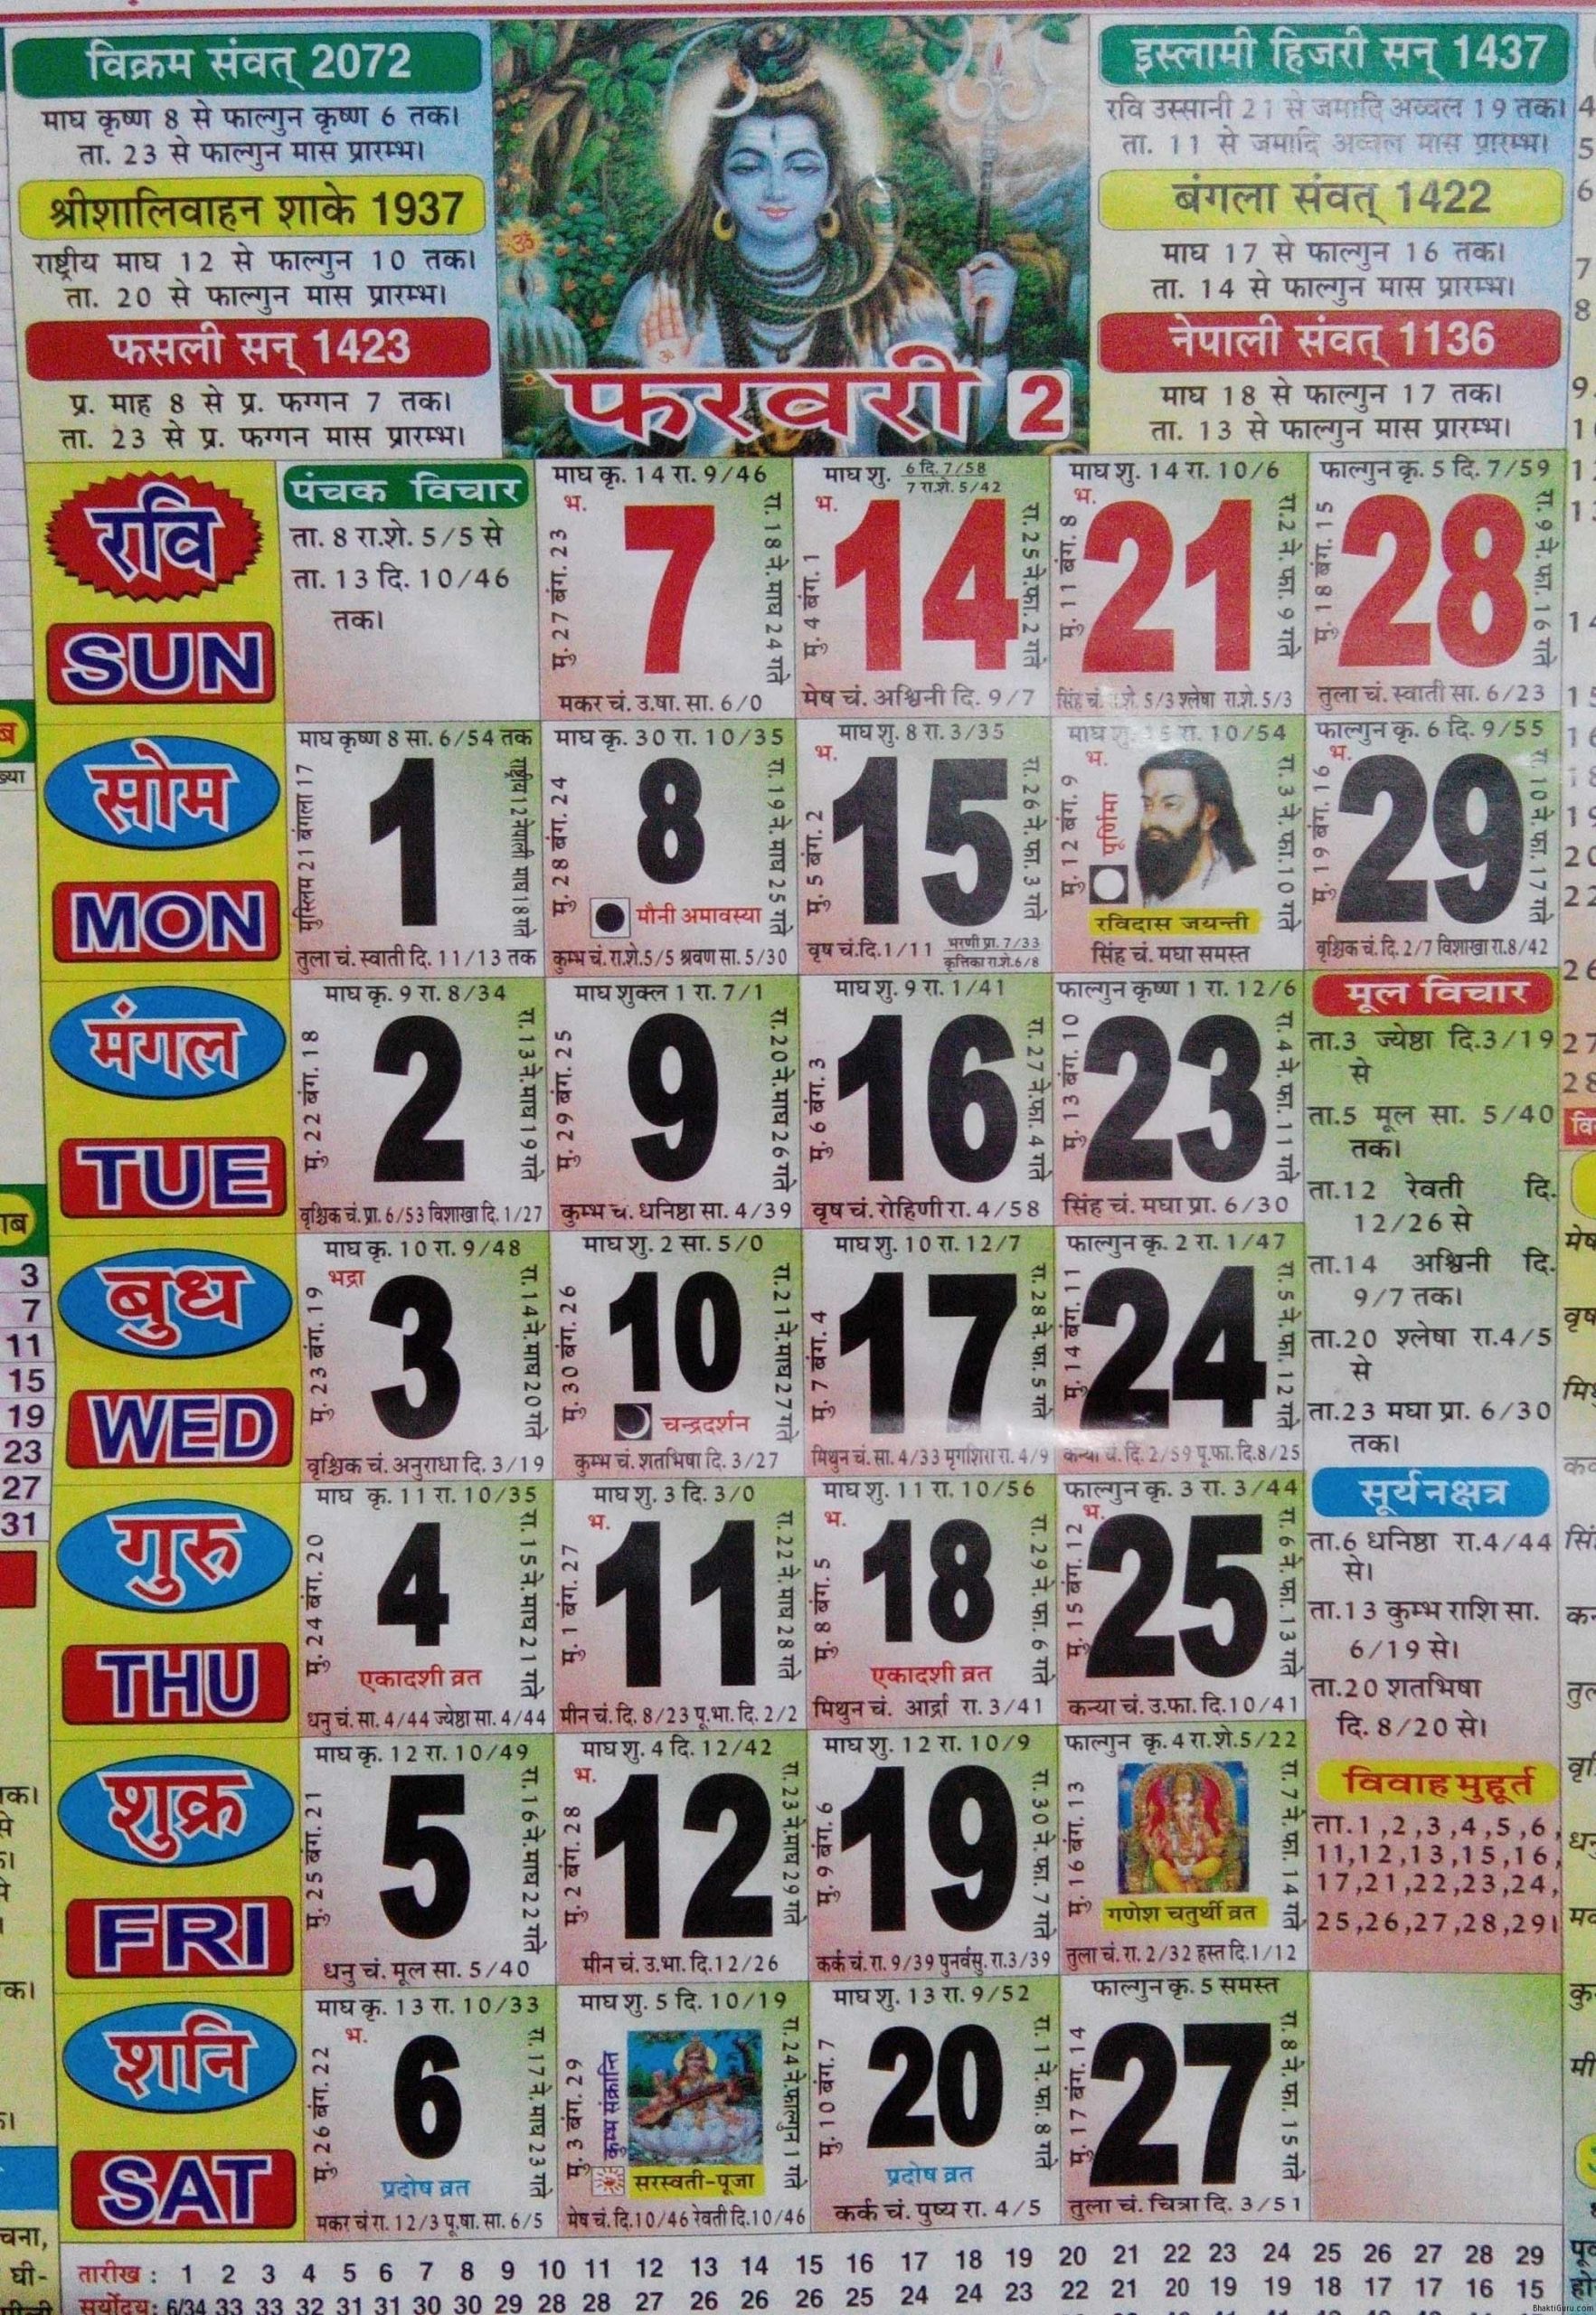 Hindu Calendar 2009 With Tithi | Template Calendar Printable regarding Hindu Calendar 2009 With Tithi